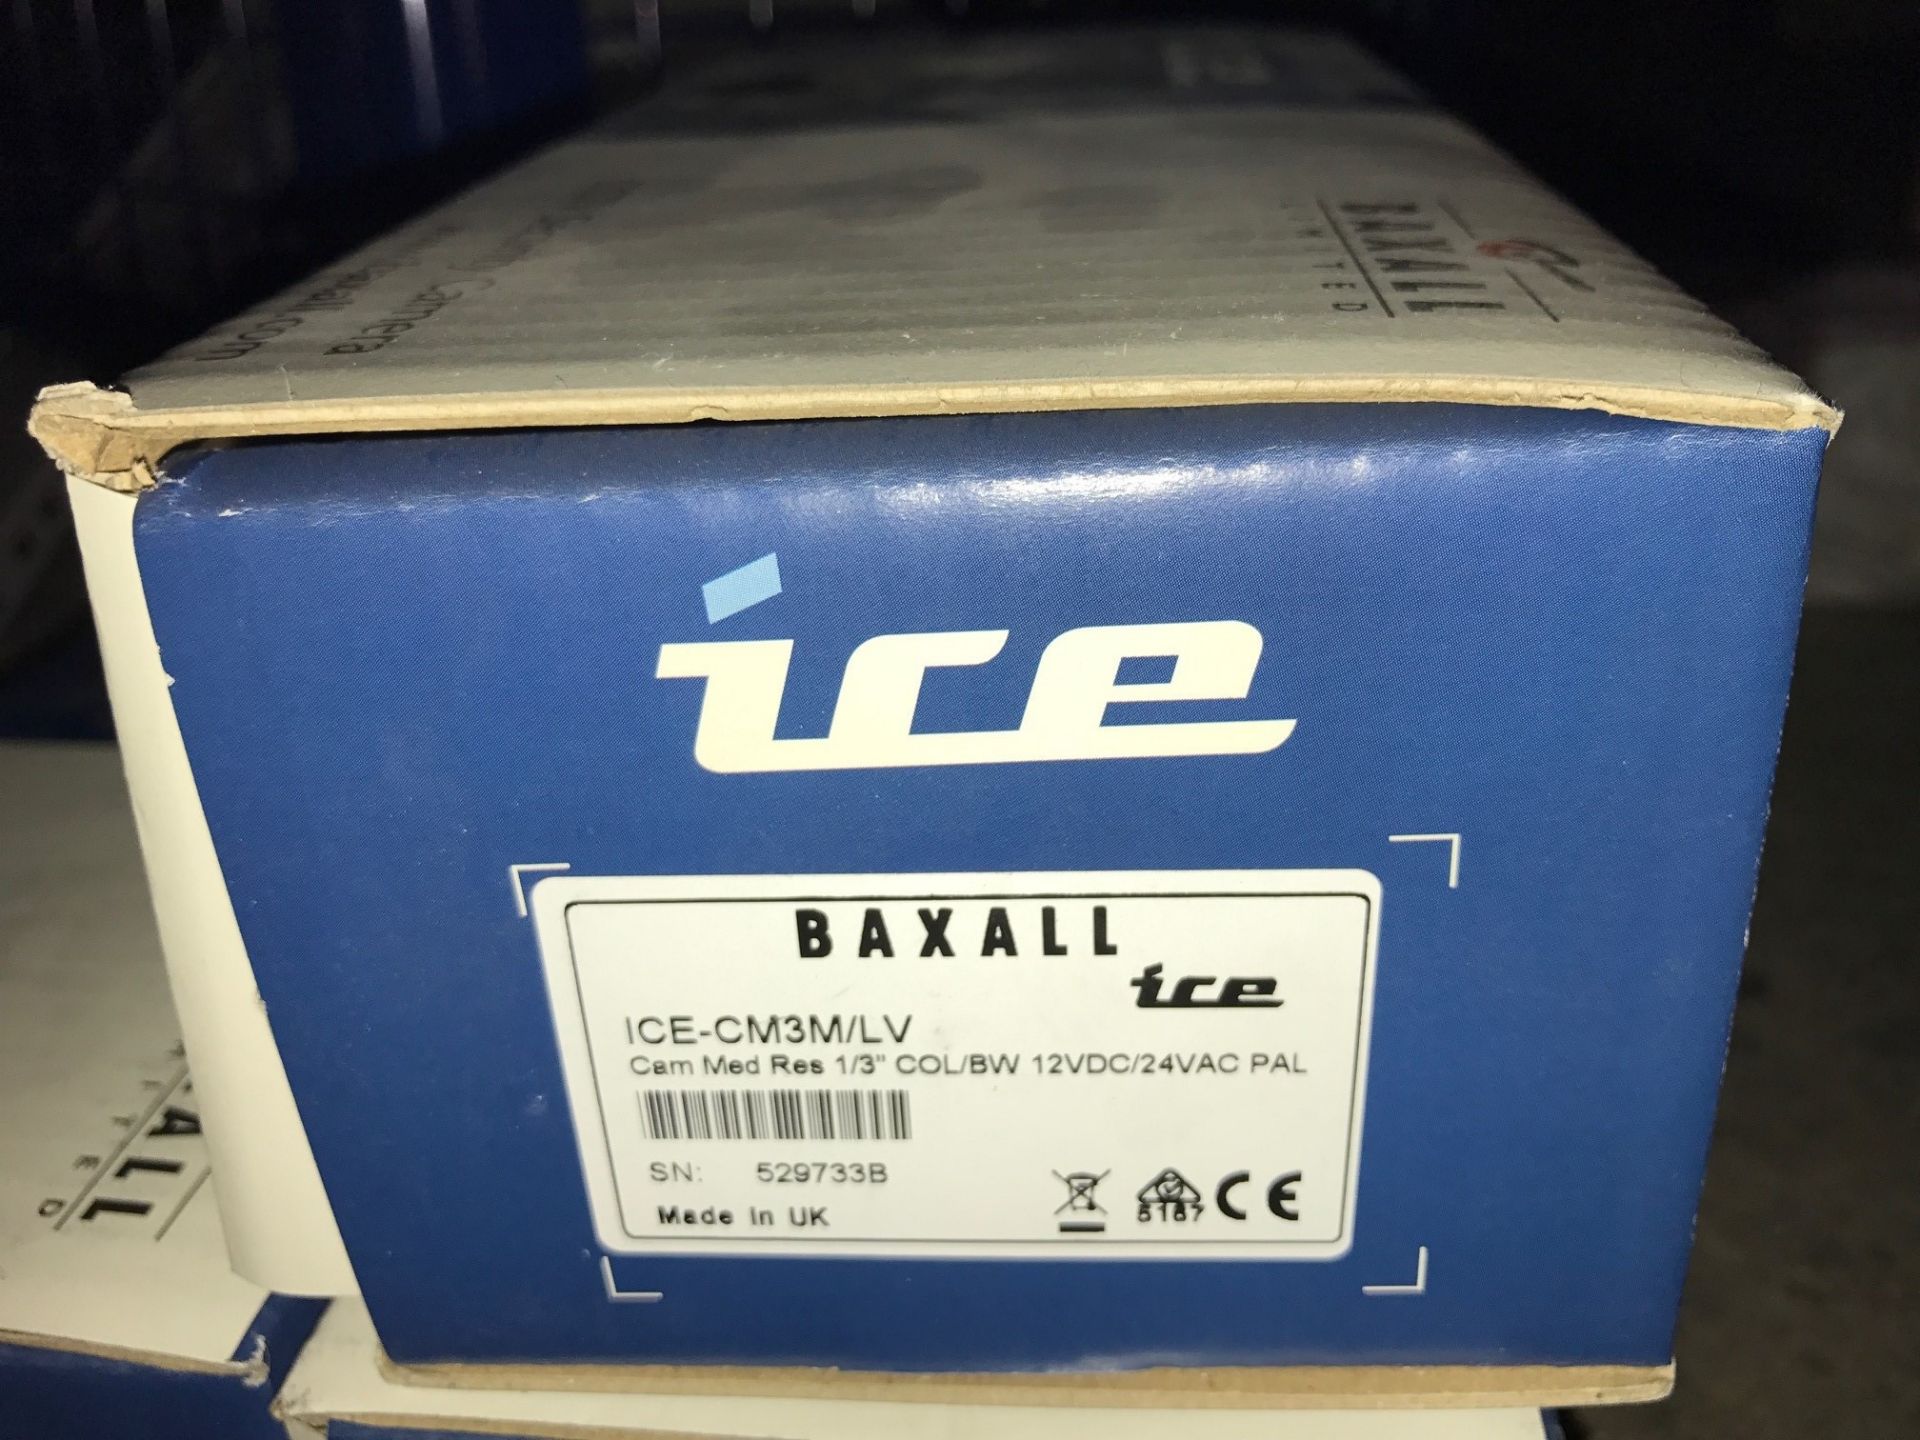 4 x Baxall ICE-CM3M/LV Medium Resolution Cameras - Cam Med Res COL/BW 12VDC/24VAC PAL (Brand New & - Image 4 of 4